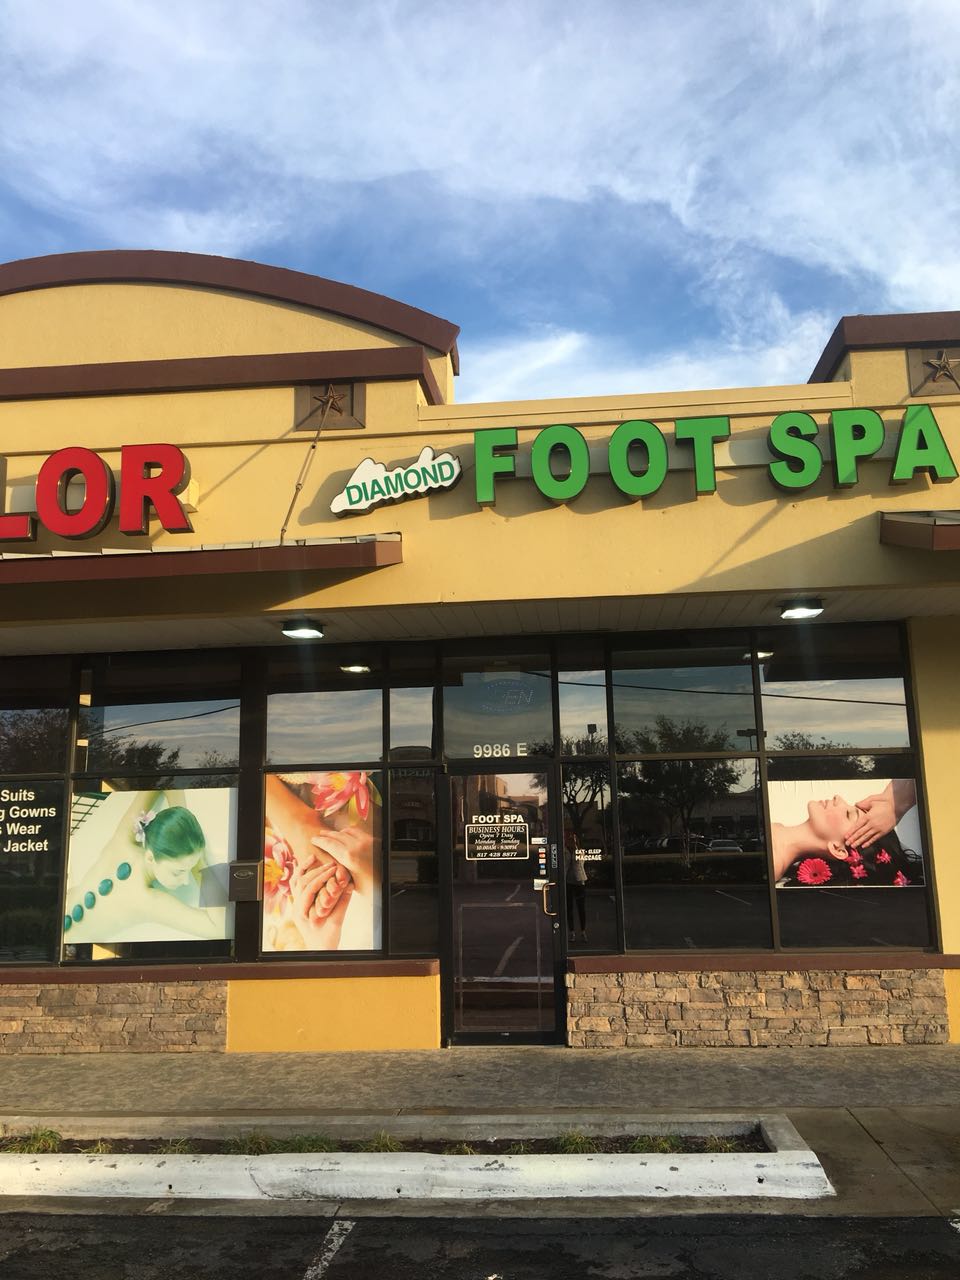 Diamond Foot Massage